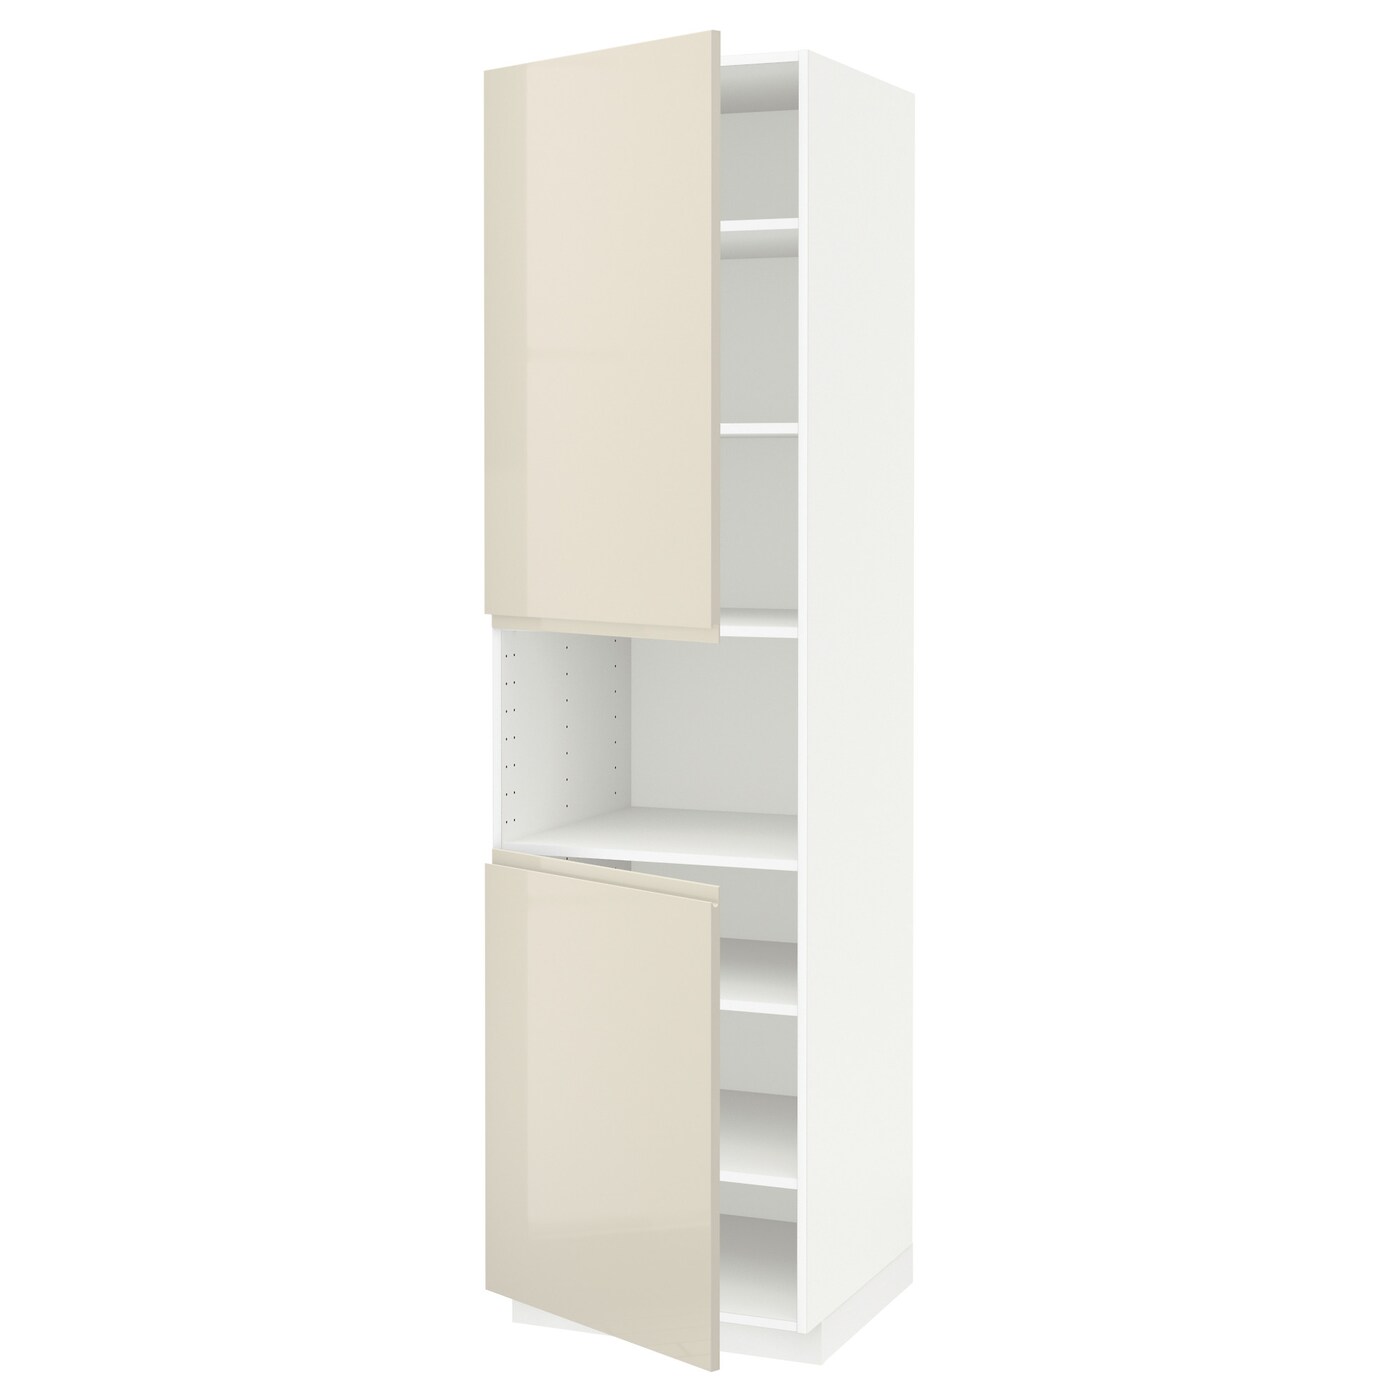 Высокий кухонный шкаф с полками - IKEA METOD/МЕТОД ИКЕА, 220х60х60 см, белый/бежевый глянцевый